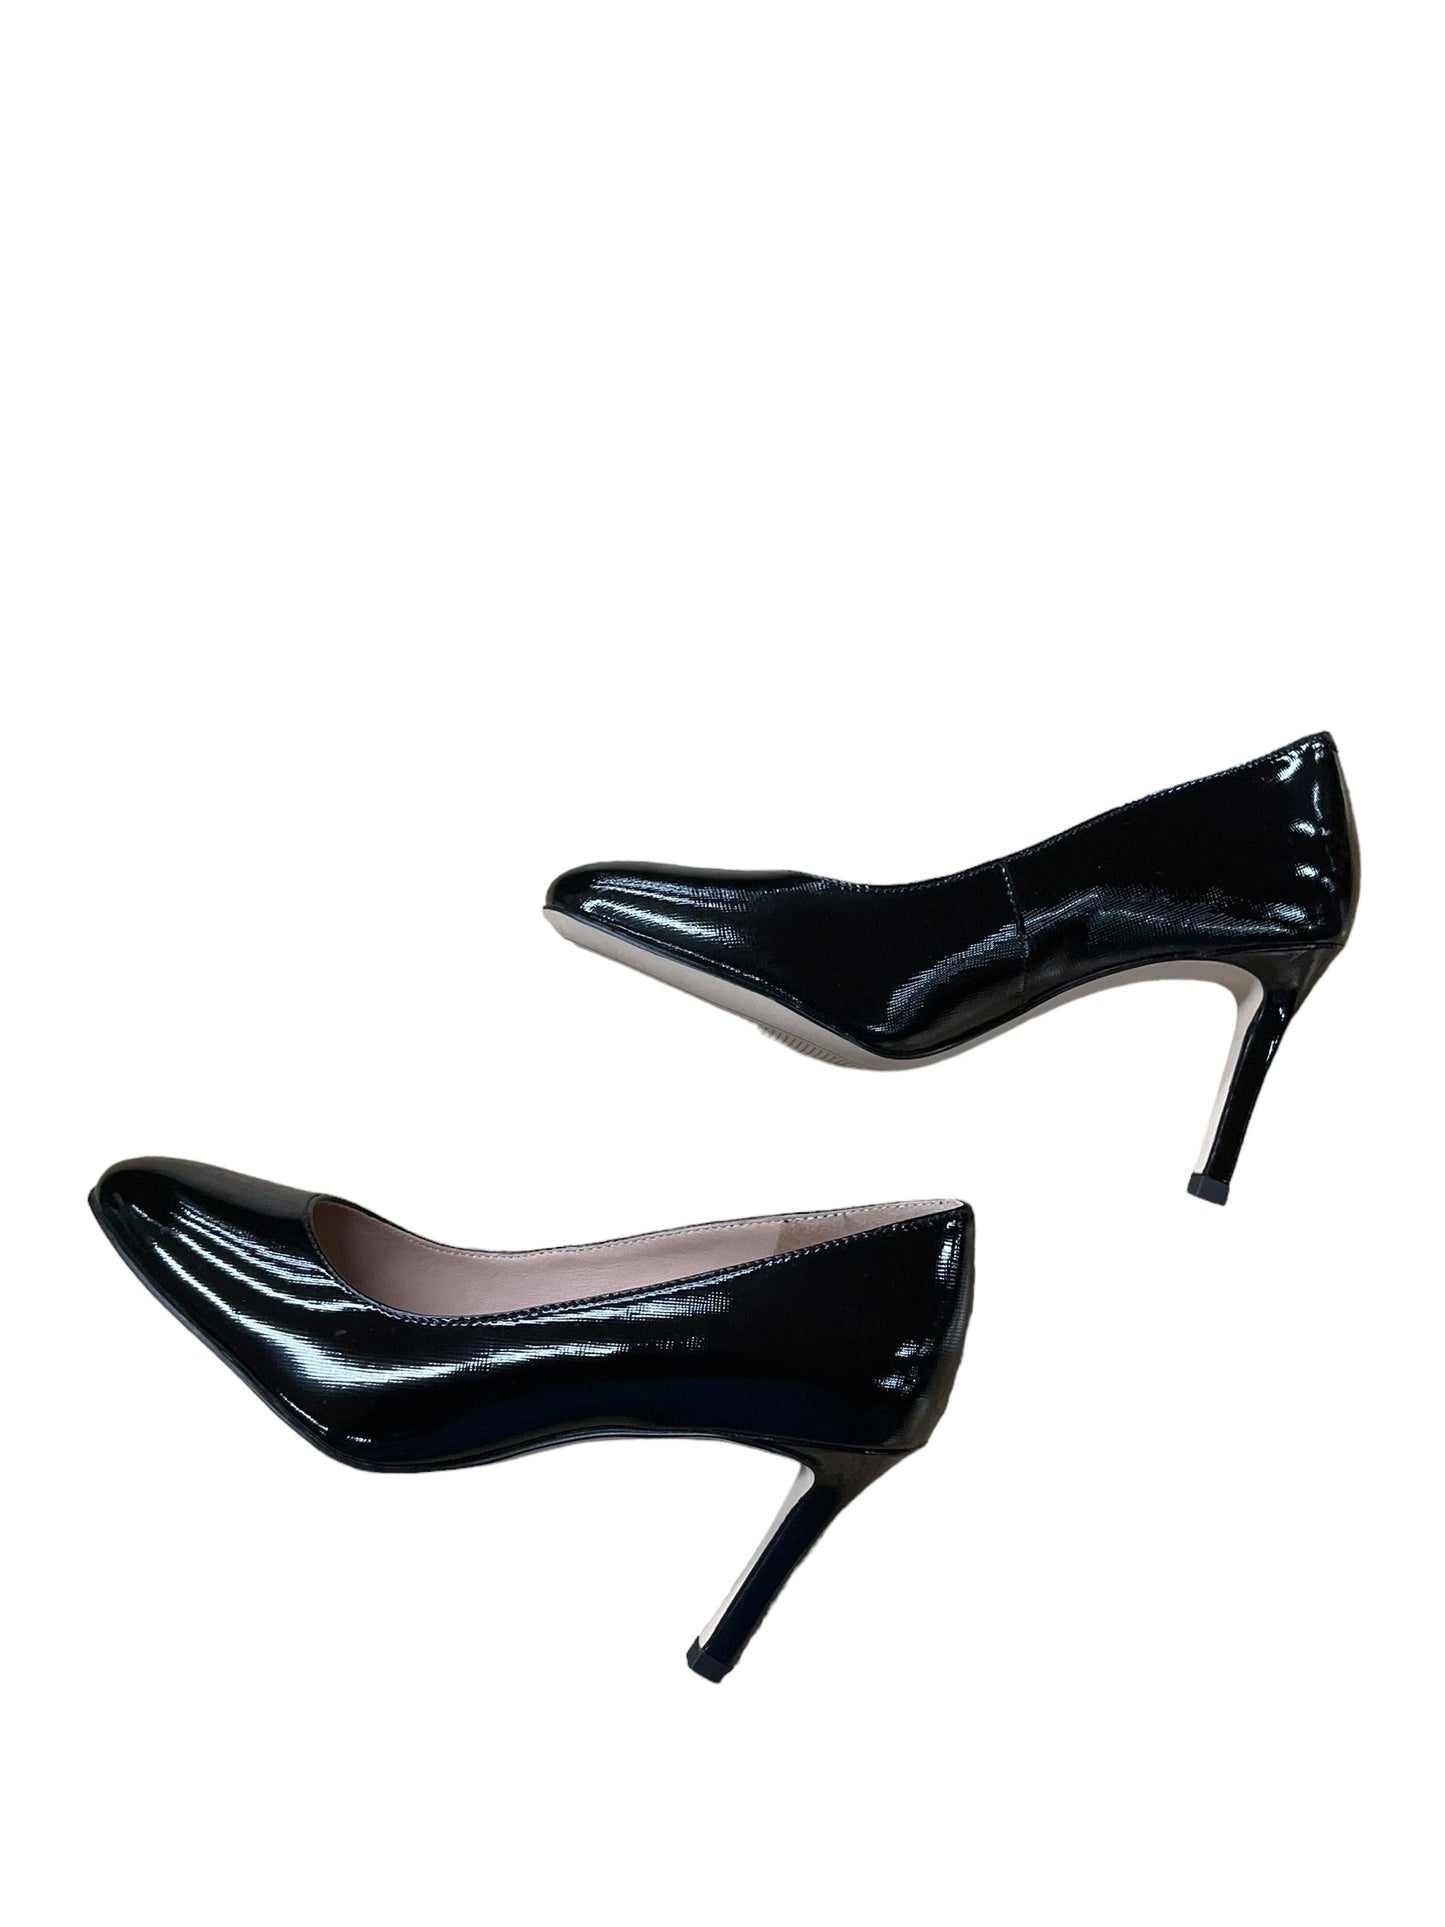 Black Shoes Heels Stiletto Cole-haan, Size 6